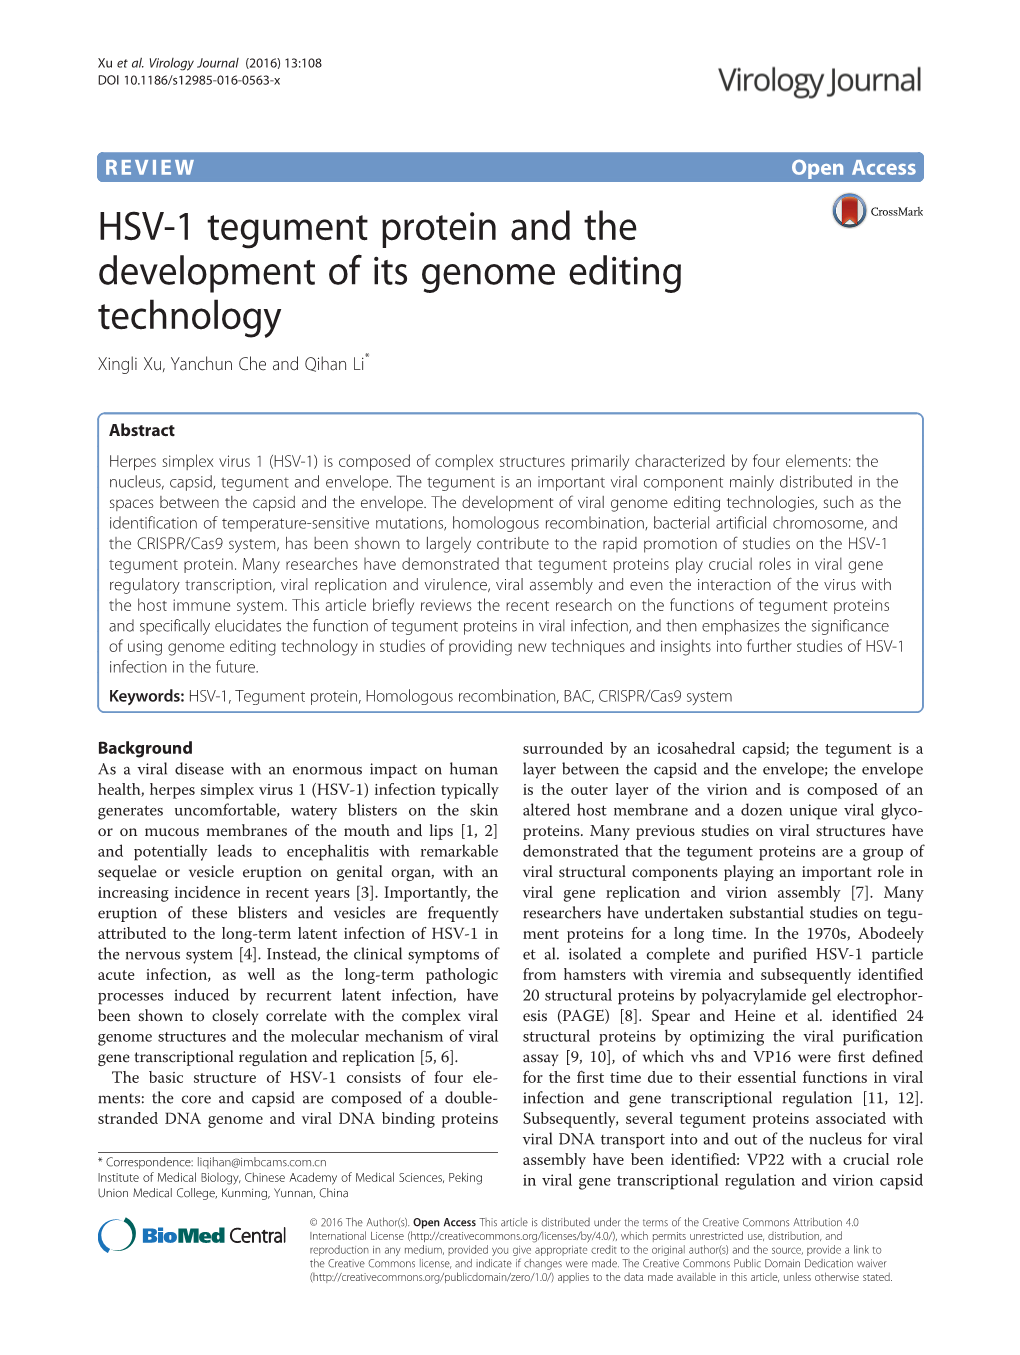 HSV-1 Tegument Protein and the Development of Its Genome Editing Technology Xingli Xu, Yanchun Che and Qihan Li*